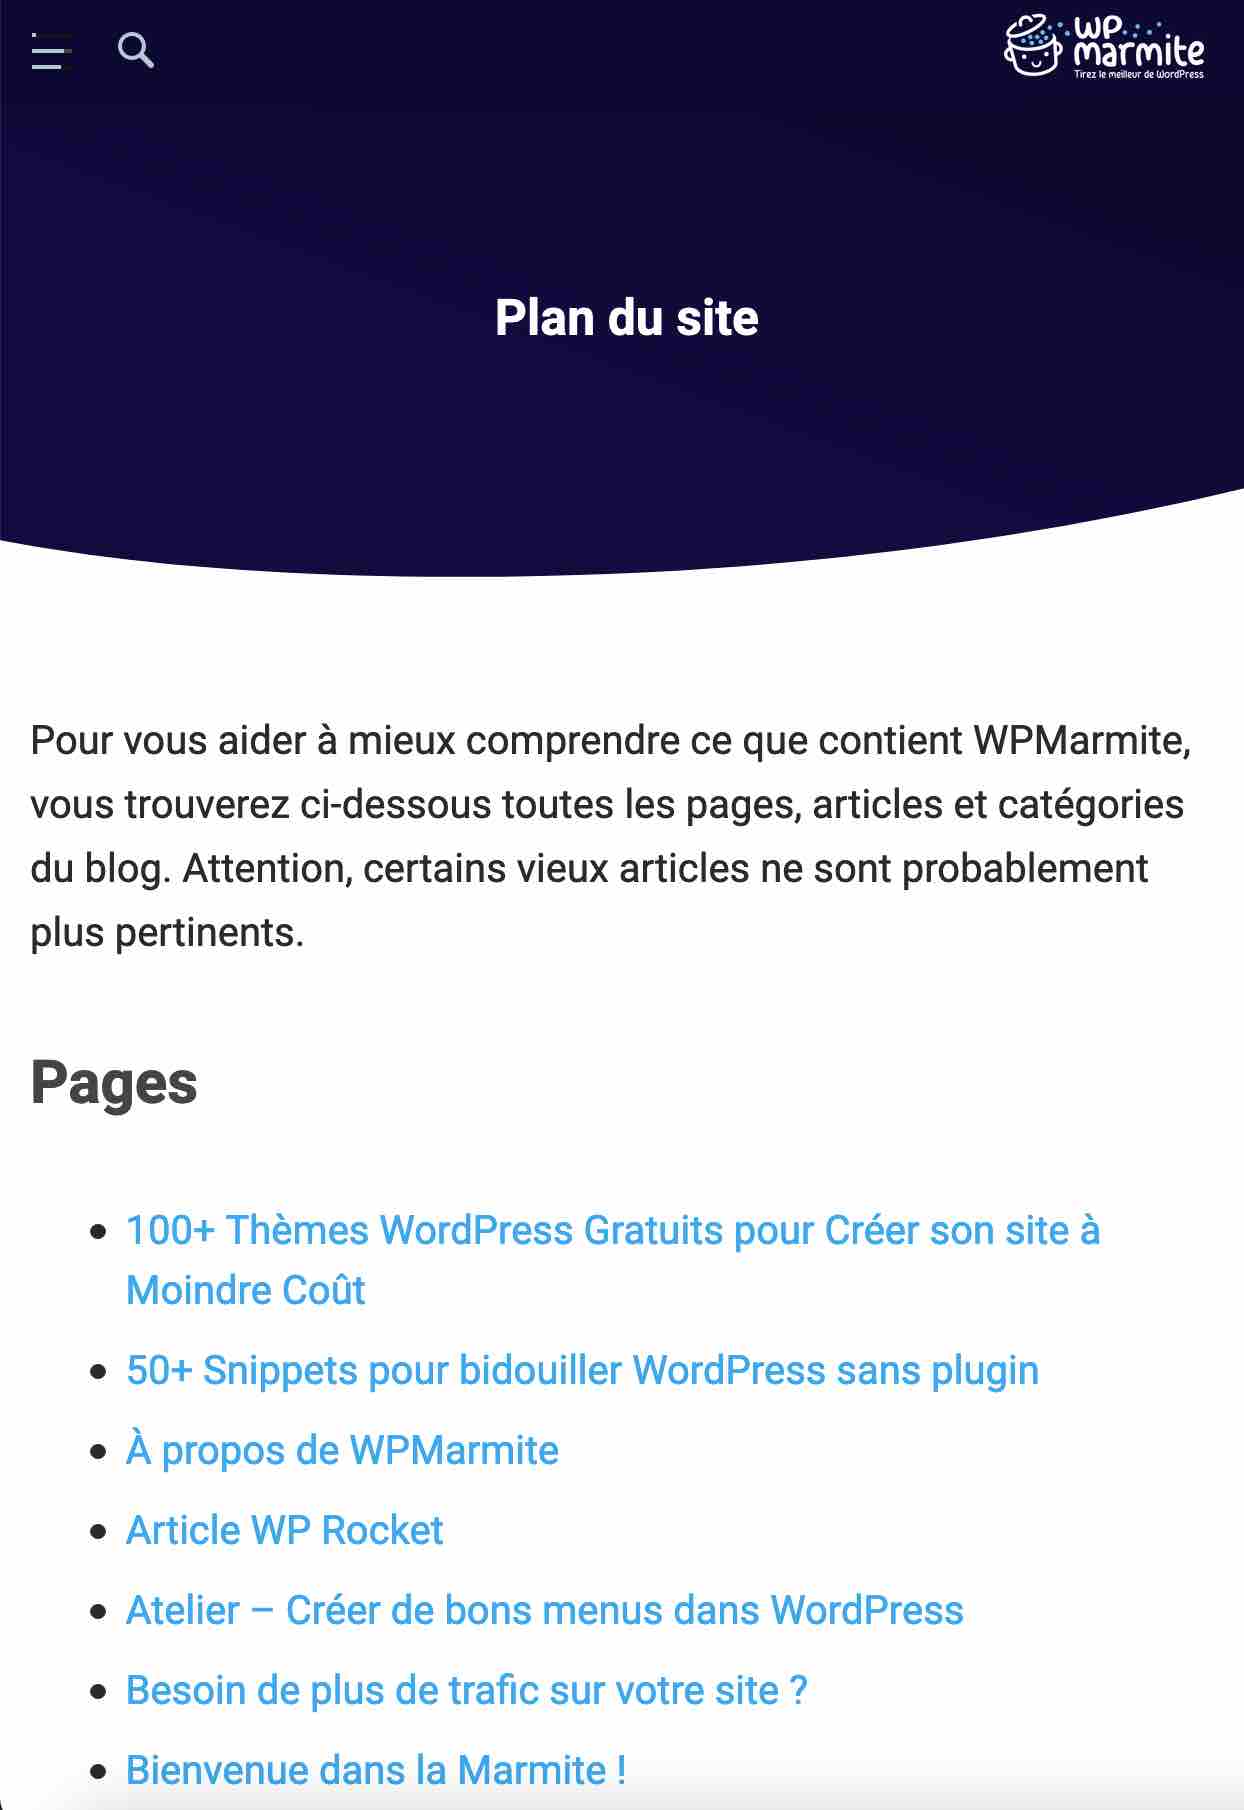 La page Plan du site de WPMarmite